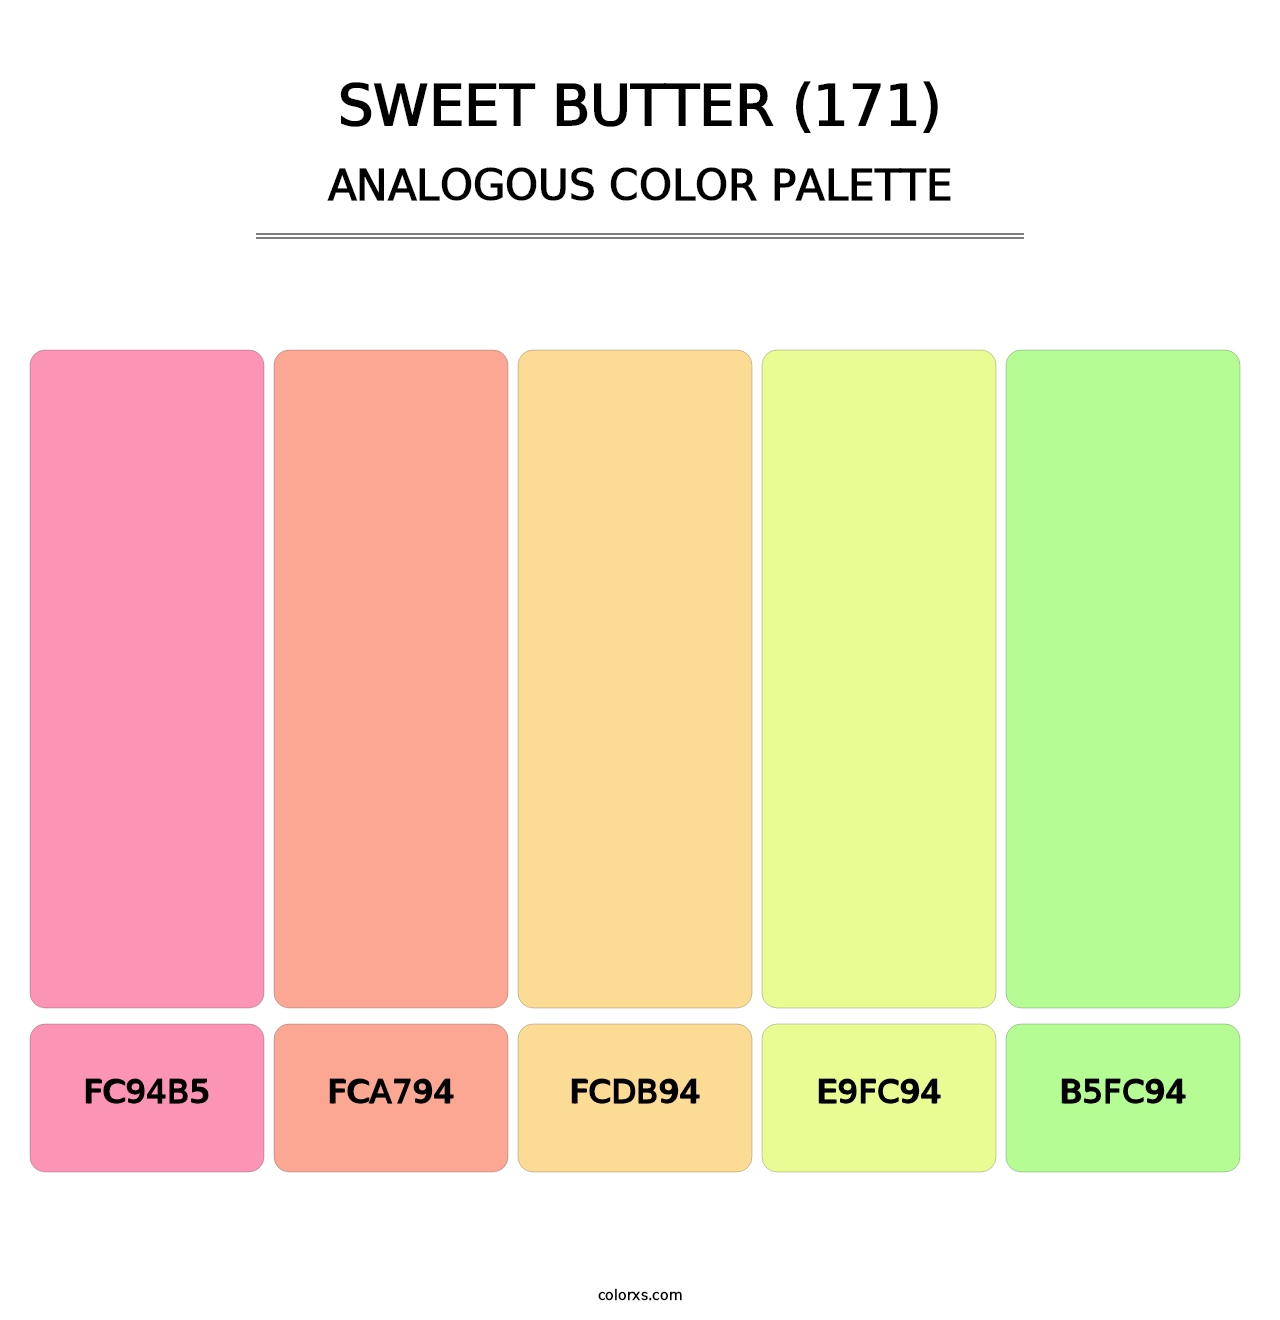 Sweet Butter (171) - Analogous Color Palette